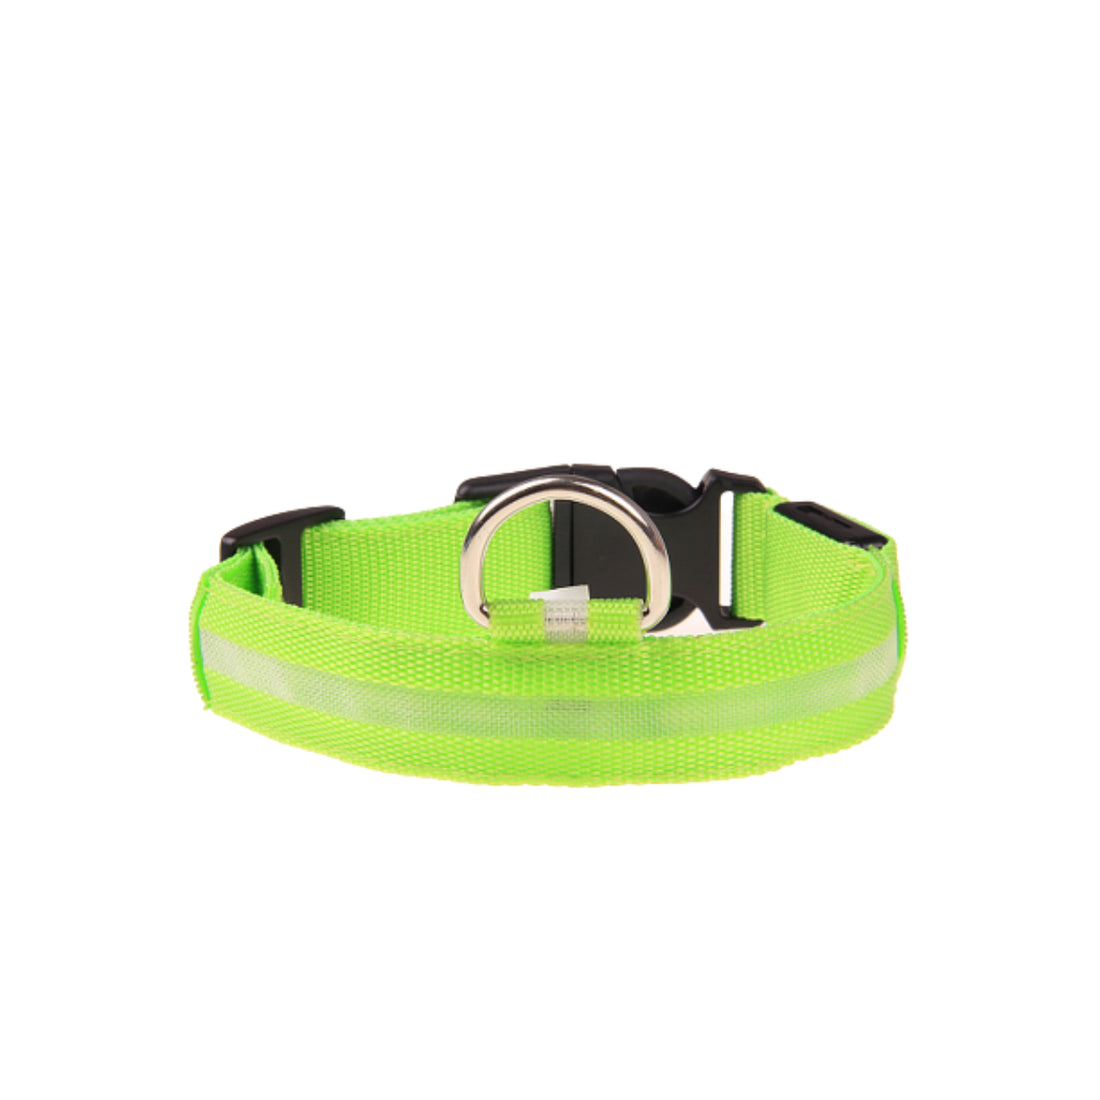 neon green LED light up dog collar